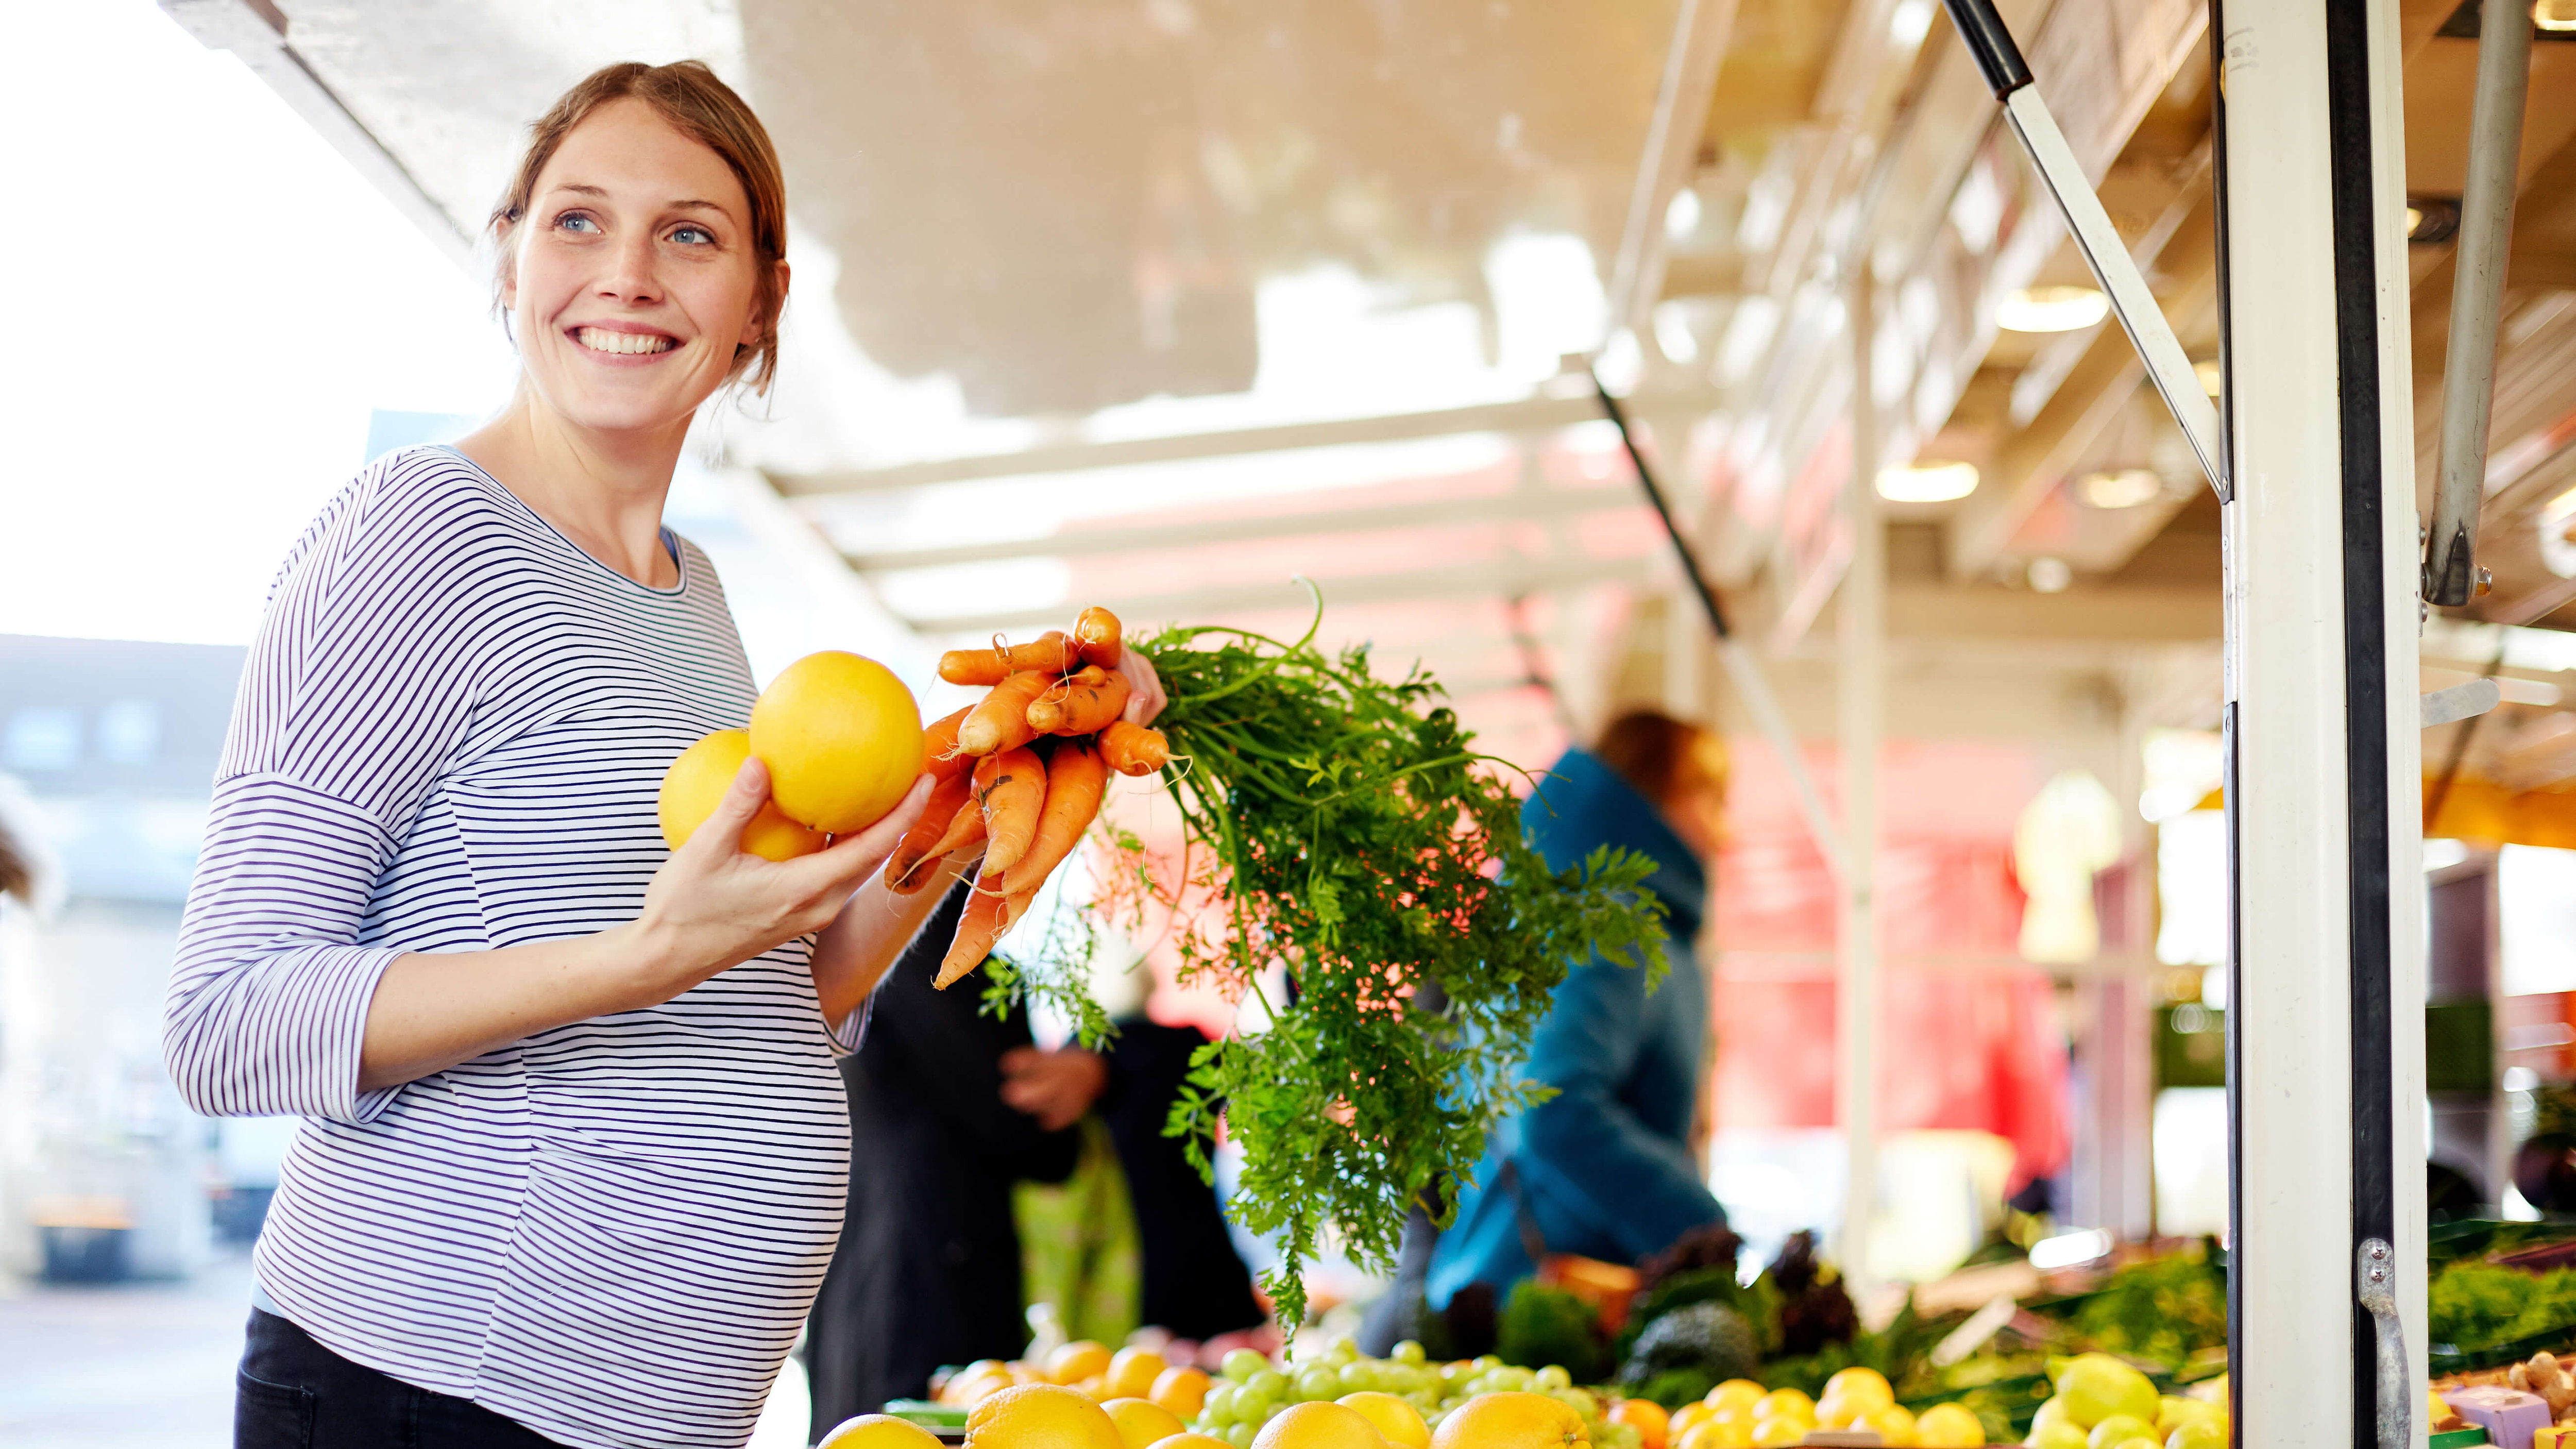 A pregnant woman shopping at an outdoor produce market